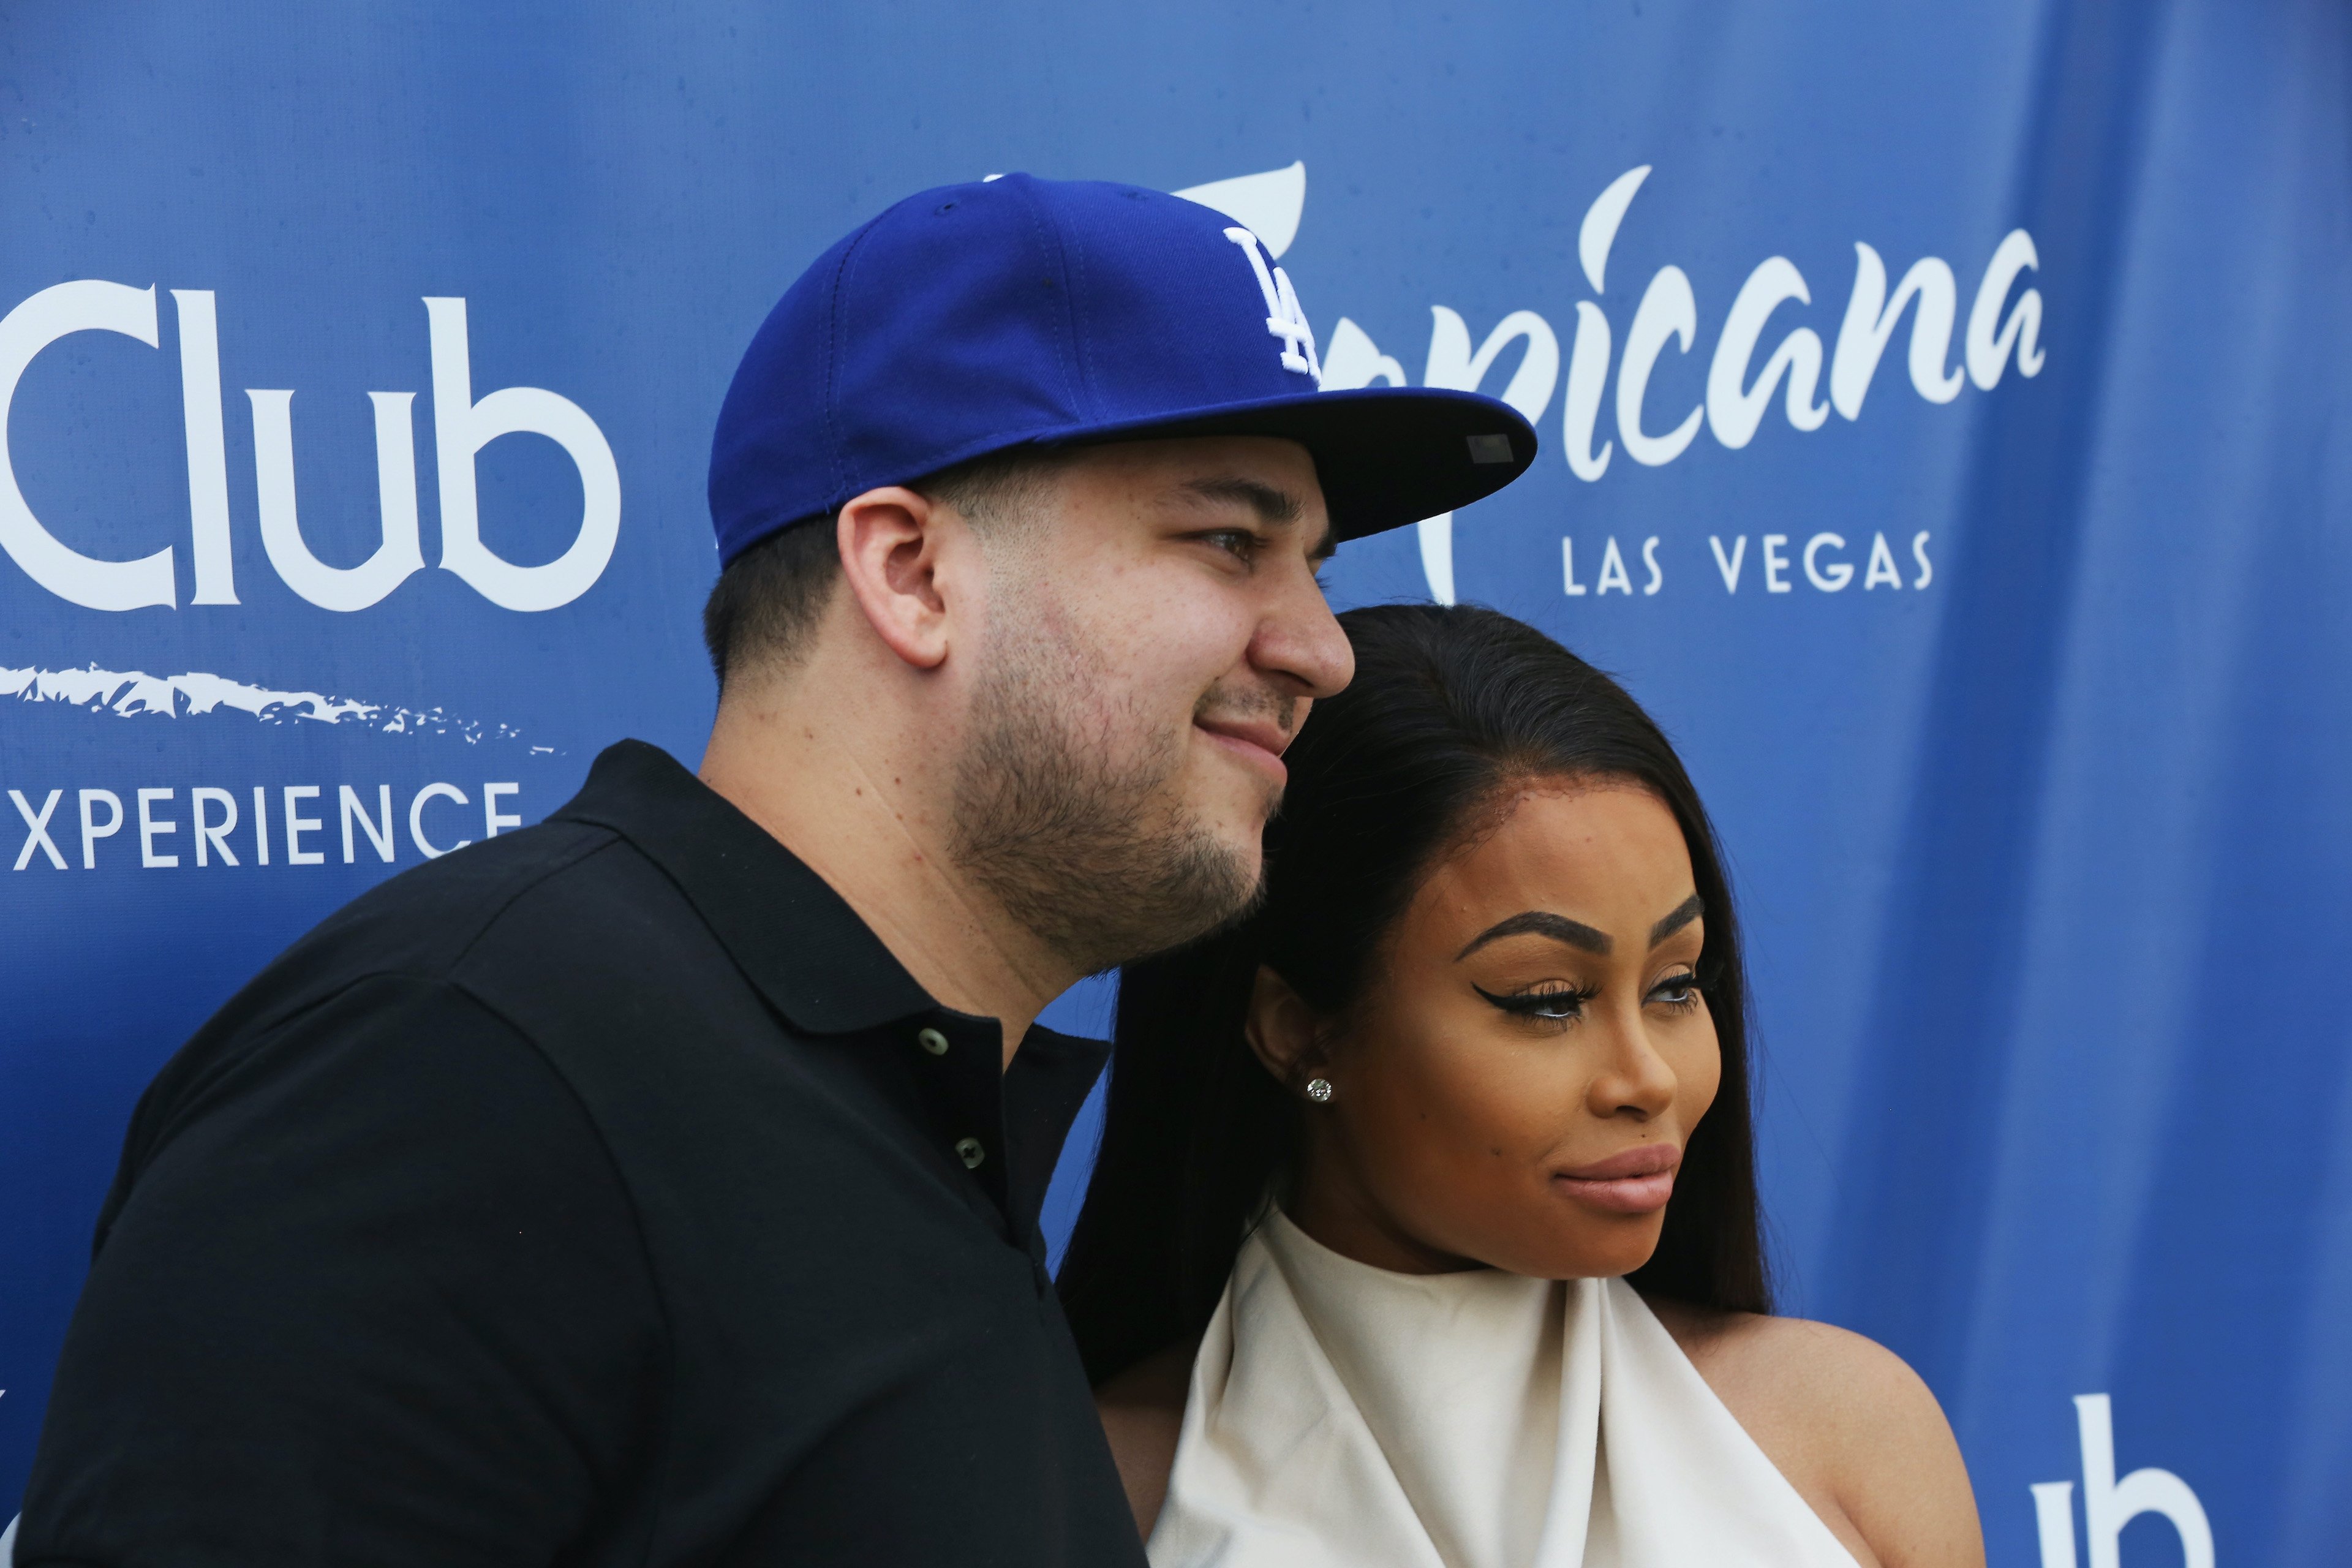 Rob Kardashian and Blac Chyna attend the Sky Beach Club at the Tropicana Las Vegas in 2016